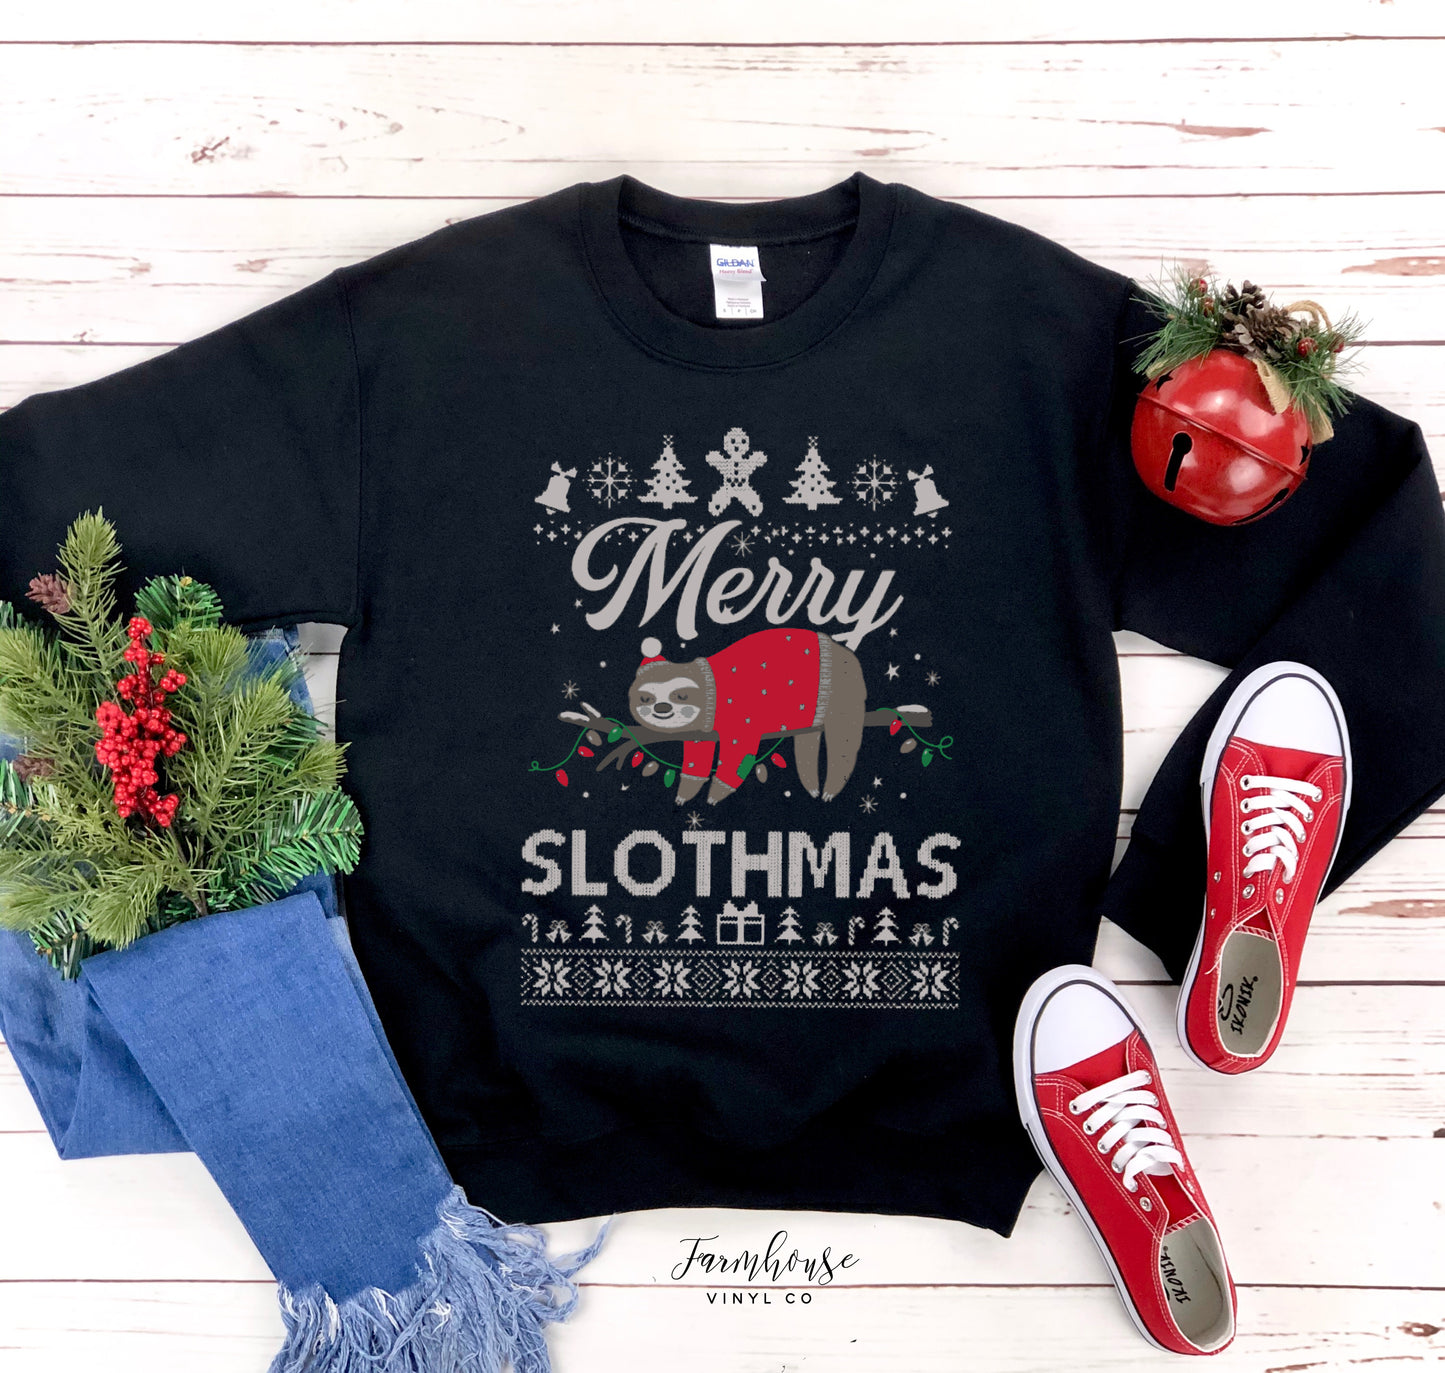 Merry Slothmas Sloth Ugly Christmas Sweatshirt